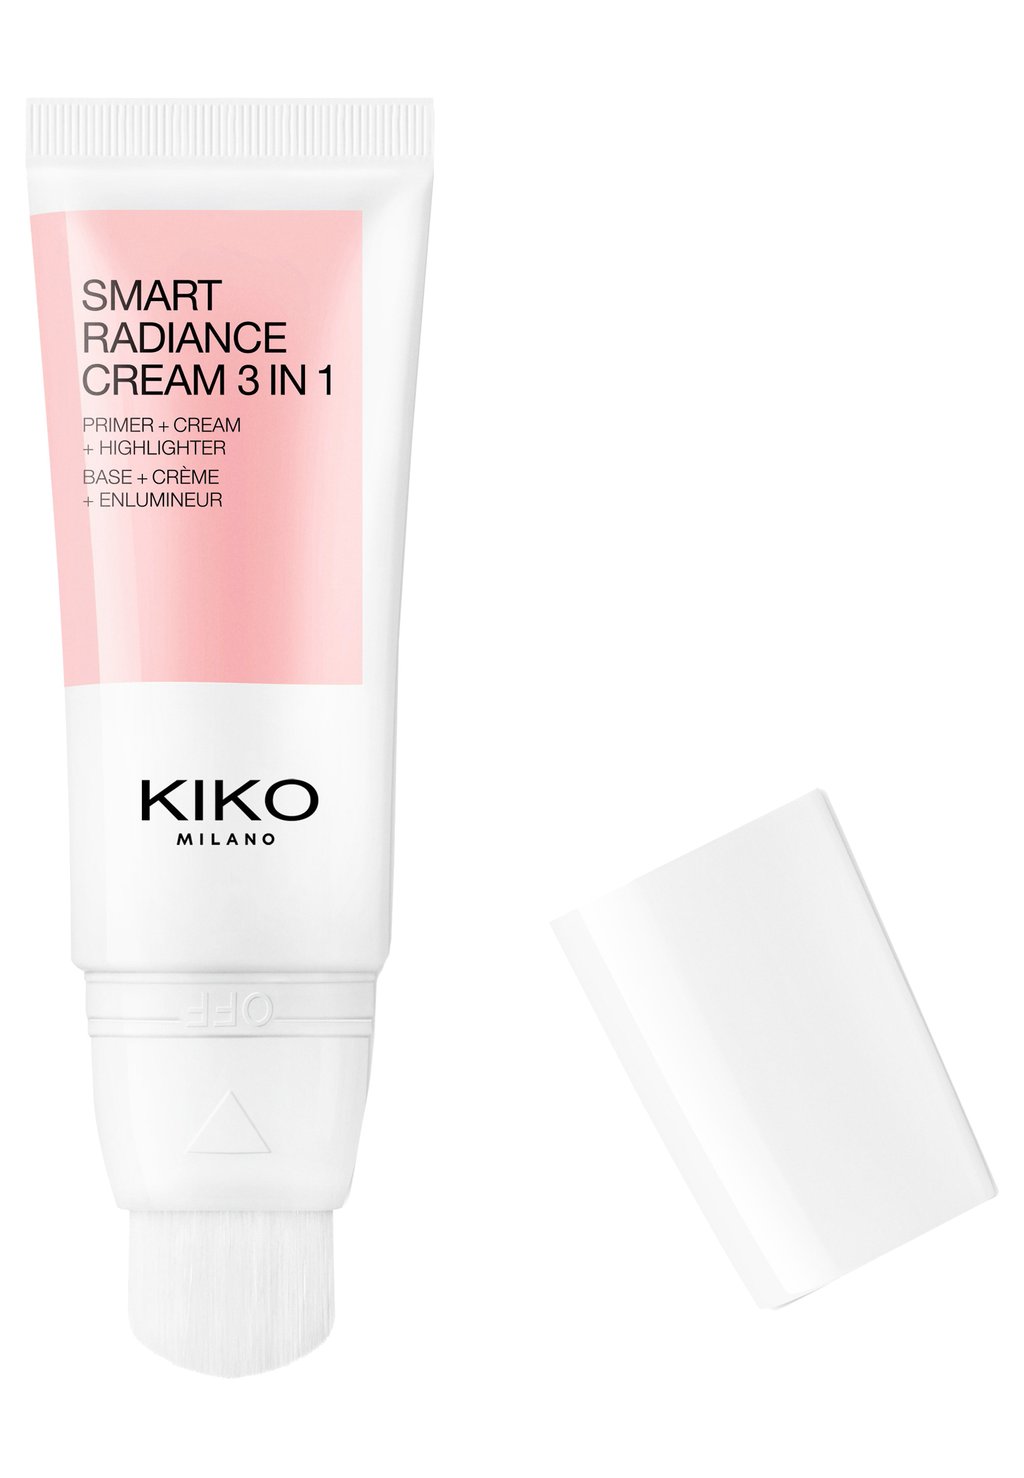 Праймер Smart Radiance Cream 3In1 KIKO Milano, цвет 03 glowing rose праймер для лица kiko milano smart radiance cream glowing rose 35 мл